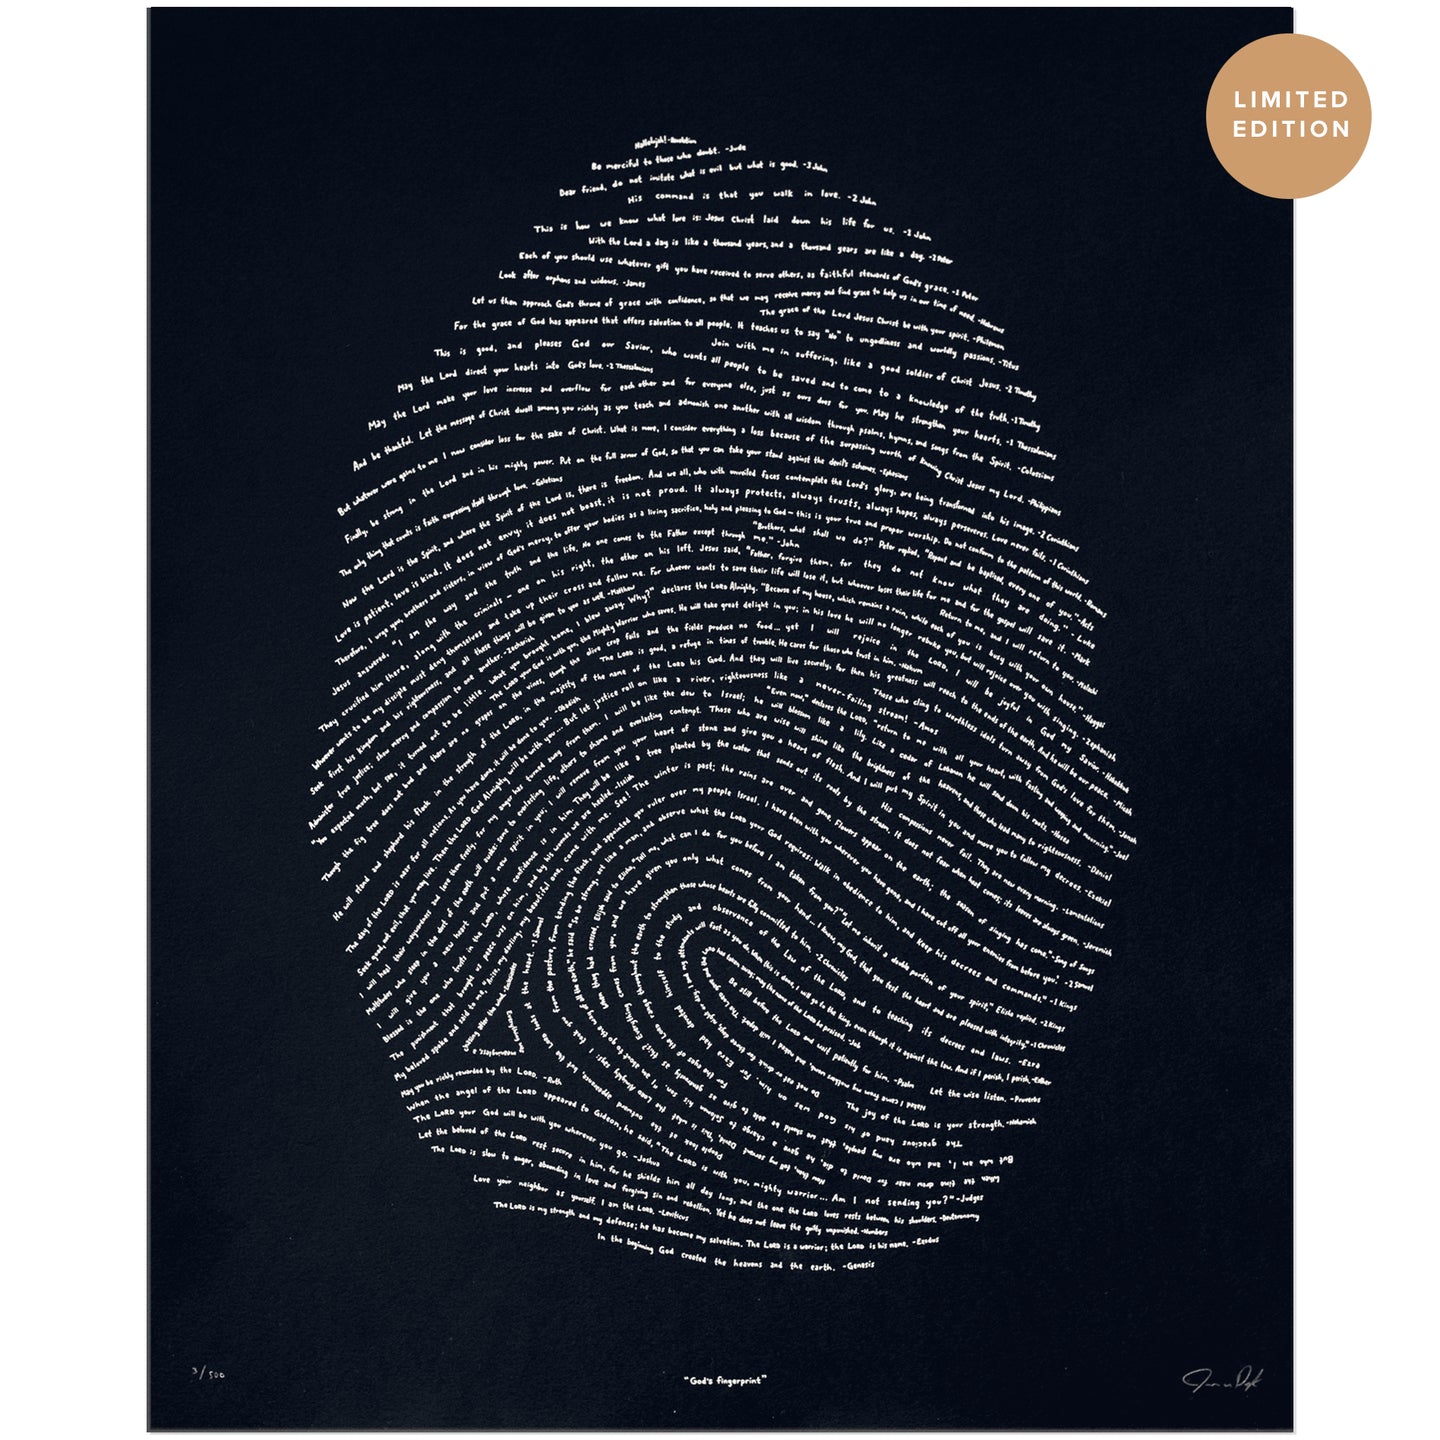 Illuminated Fingerprint - Silver on Black (Limited Edition)